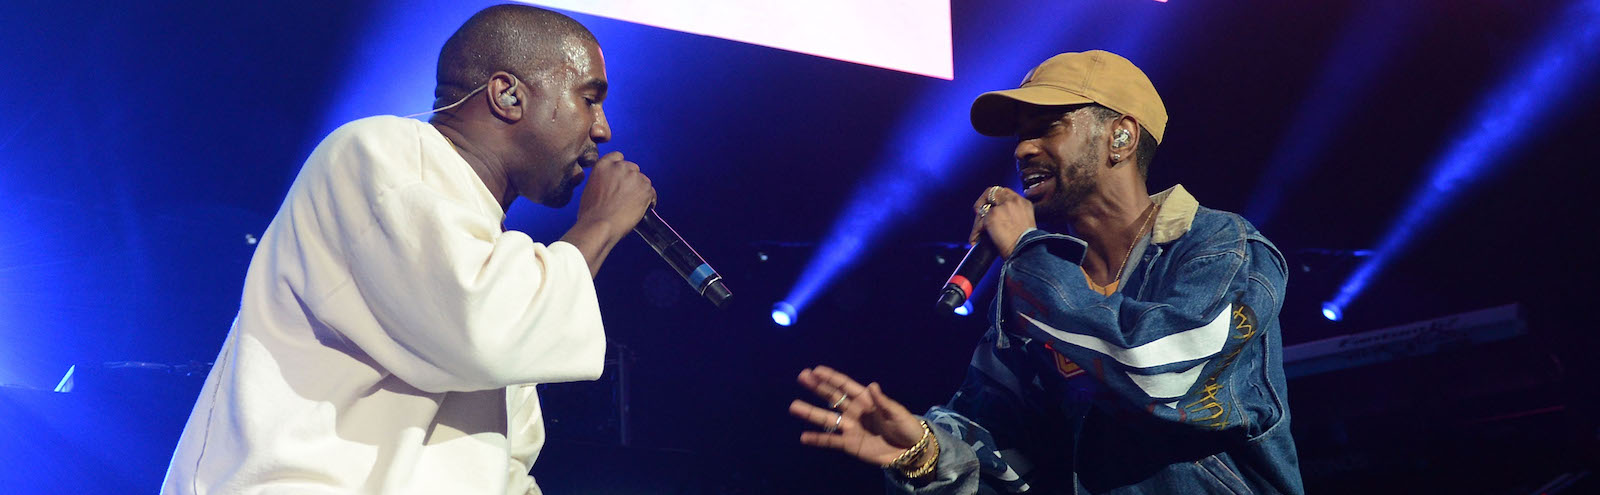 Kanye West & Big Sean Powerhouse 106 2016